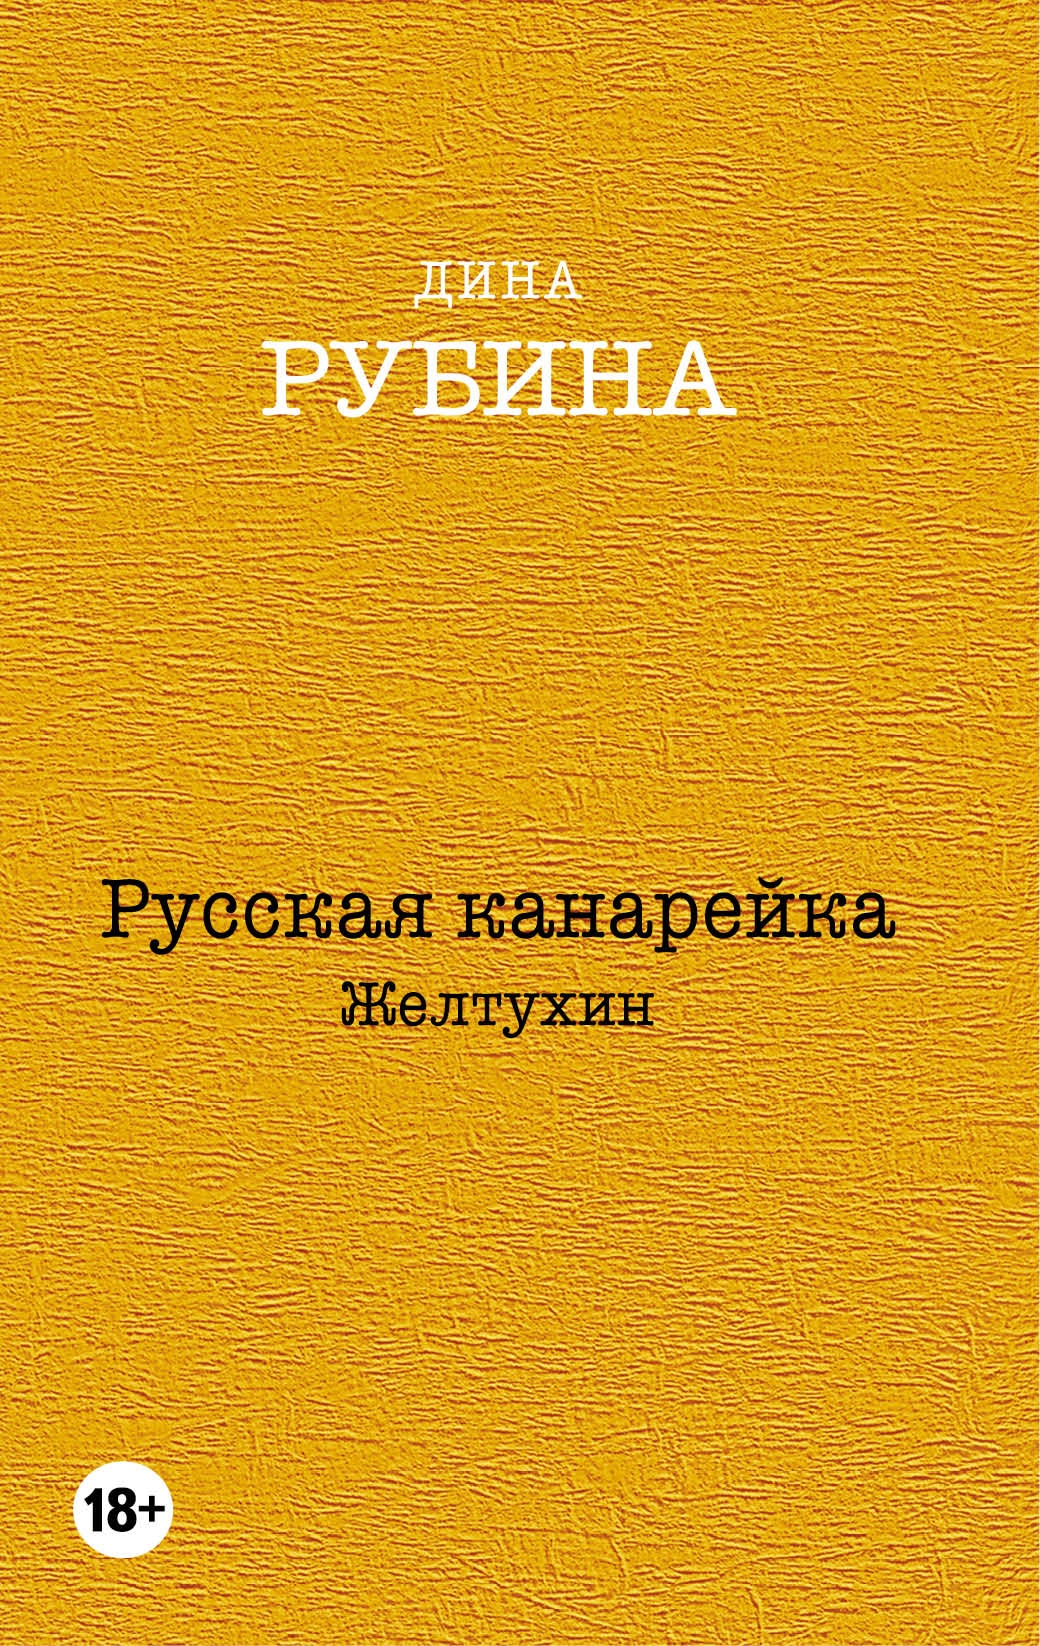 Book “Русская канарейка. Желтухин” by Дина Рубина — July 12, 2021